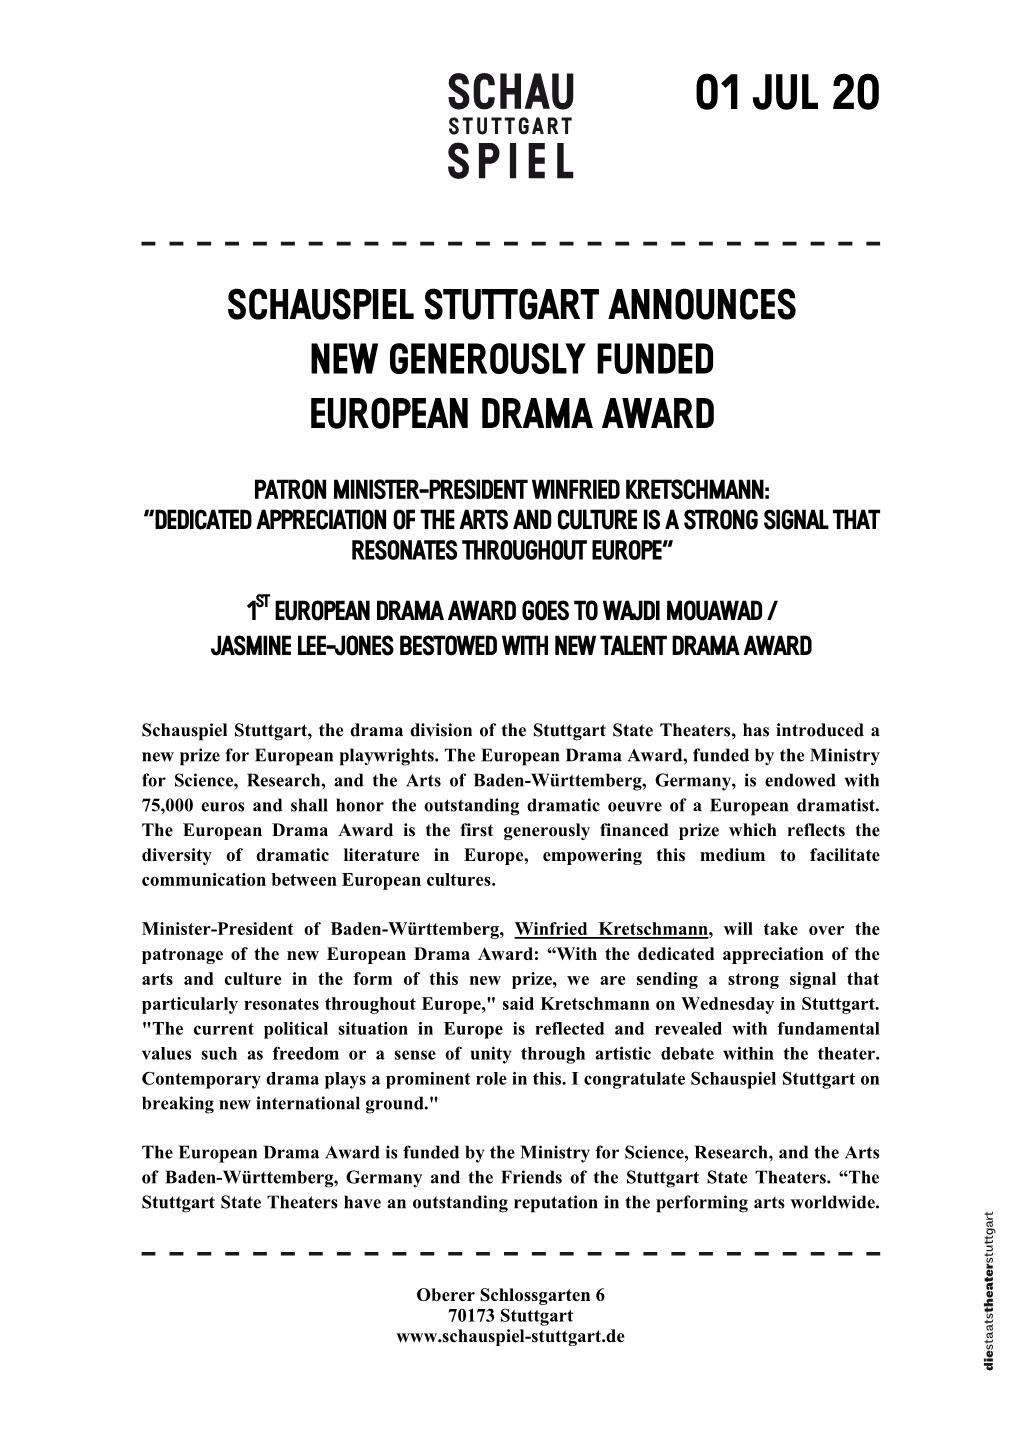 European Drama Award Goes to Wajdi Mouawad / Jasmine Lee-Jones Bestowed with New Talent Drama Award